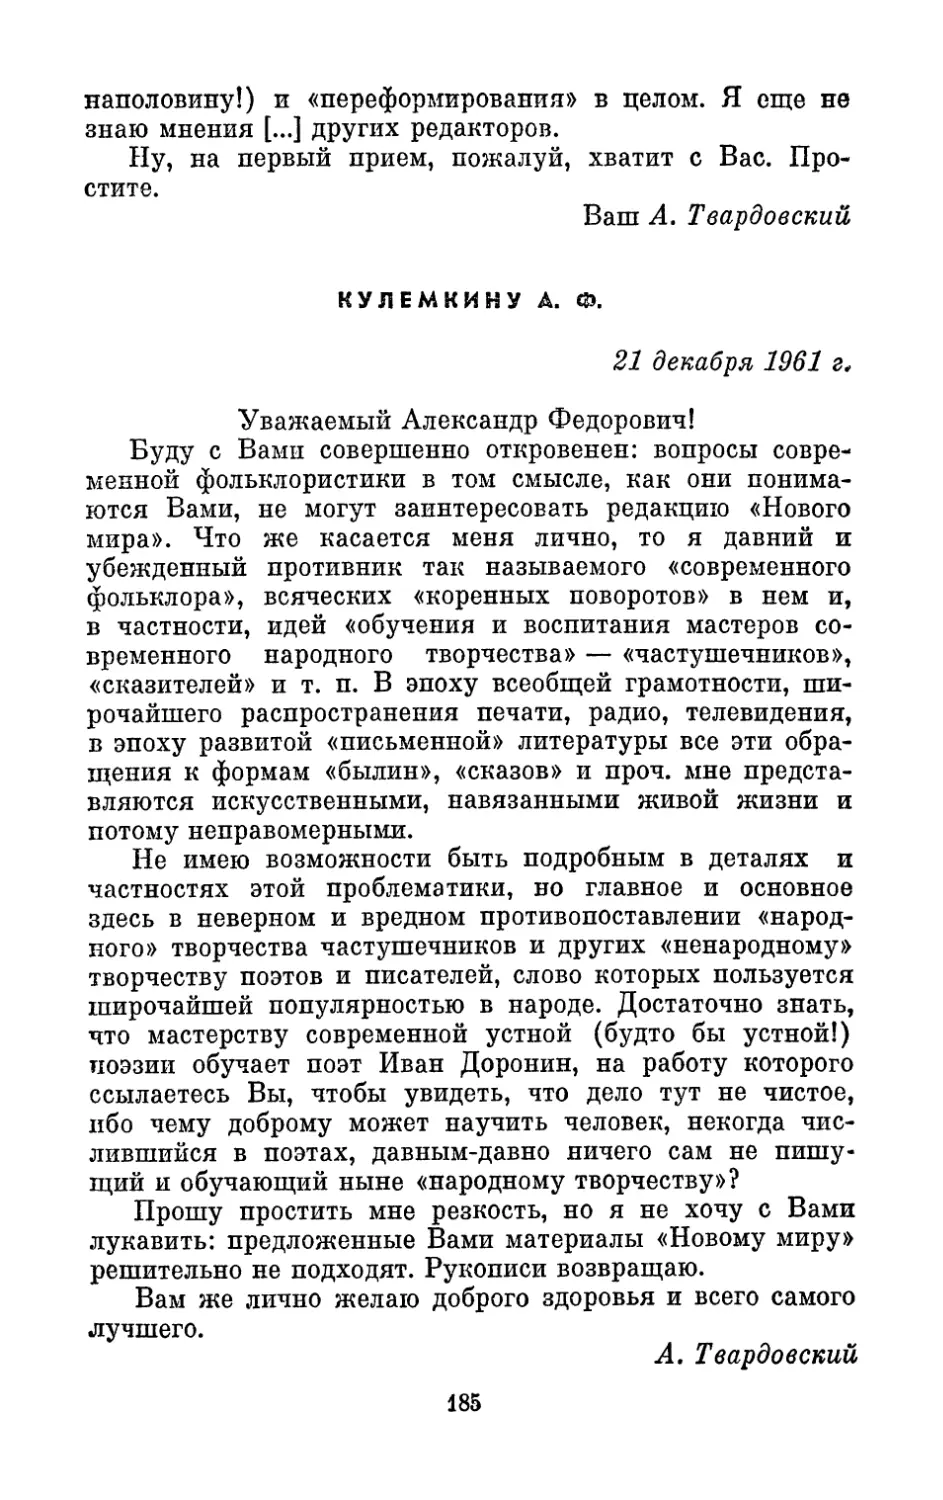 Кулемкину А. Ф., 21 декабря 1961 г.